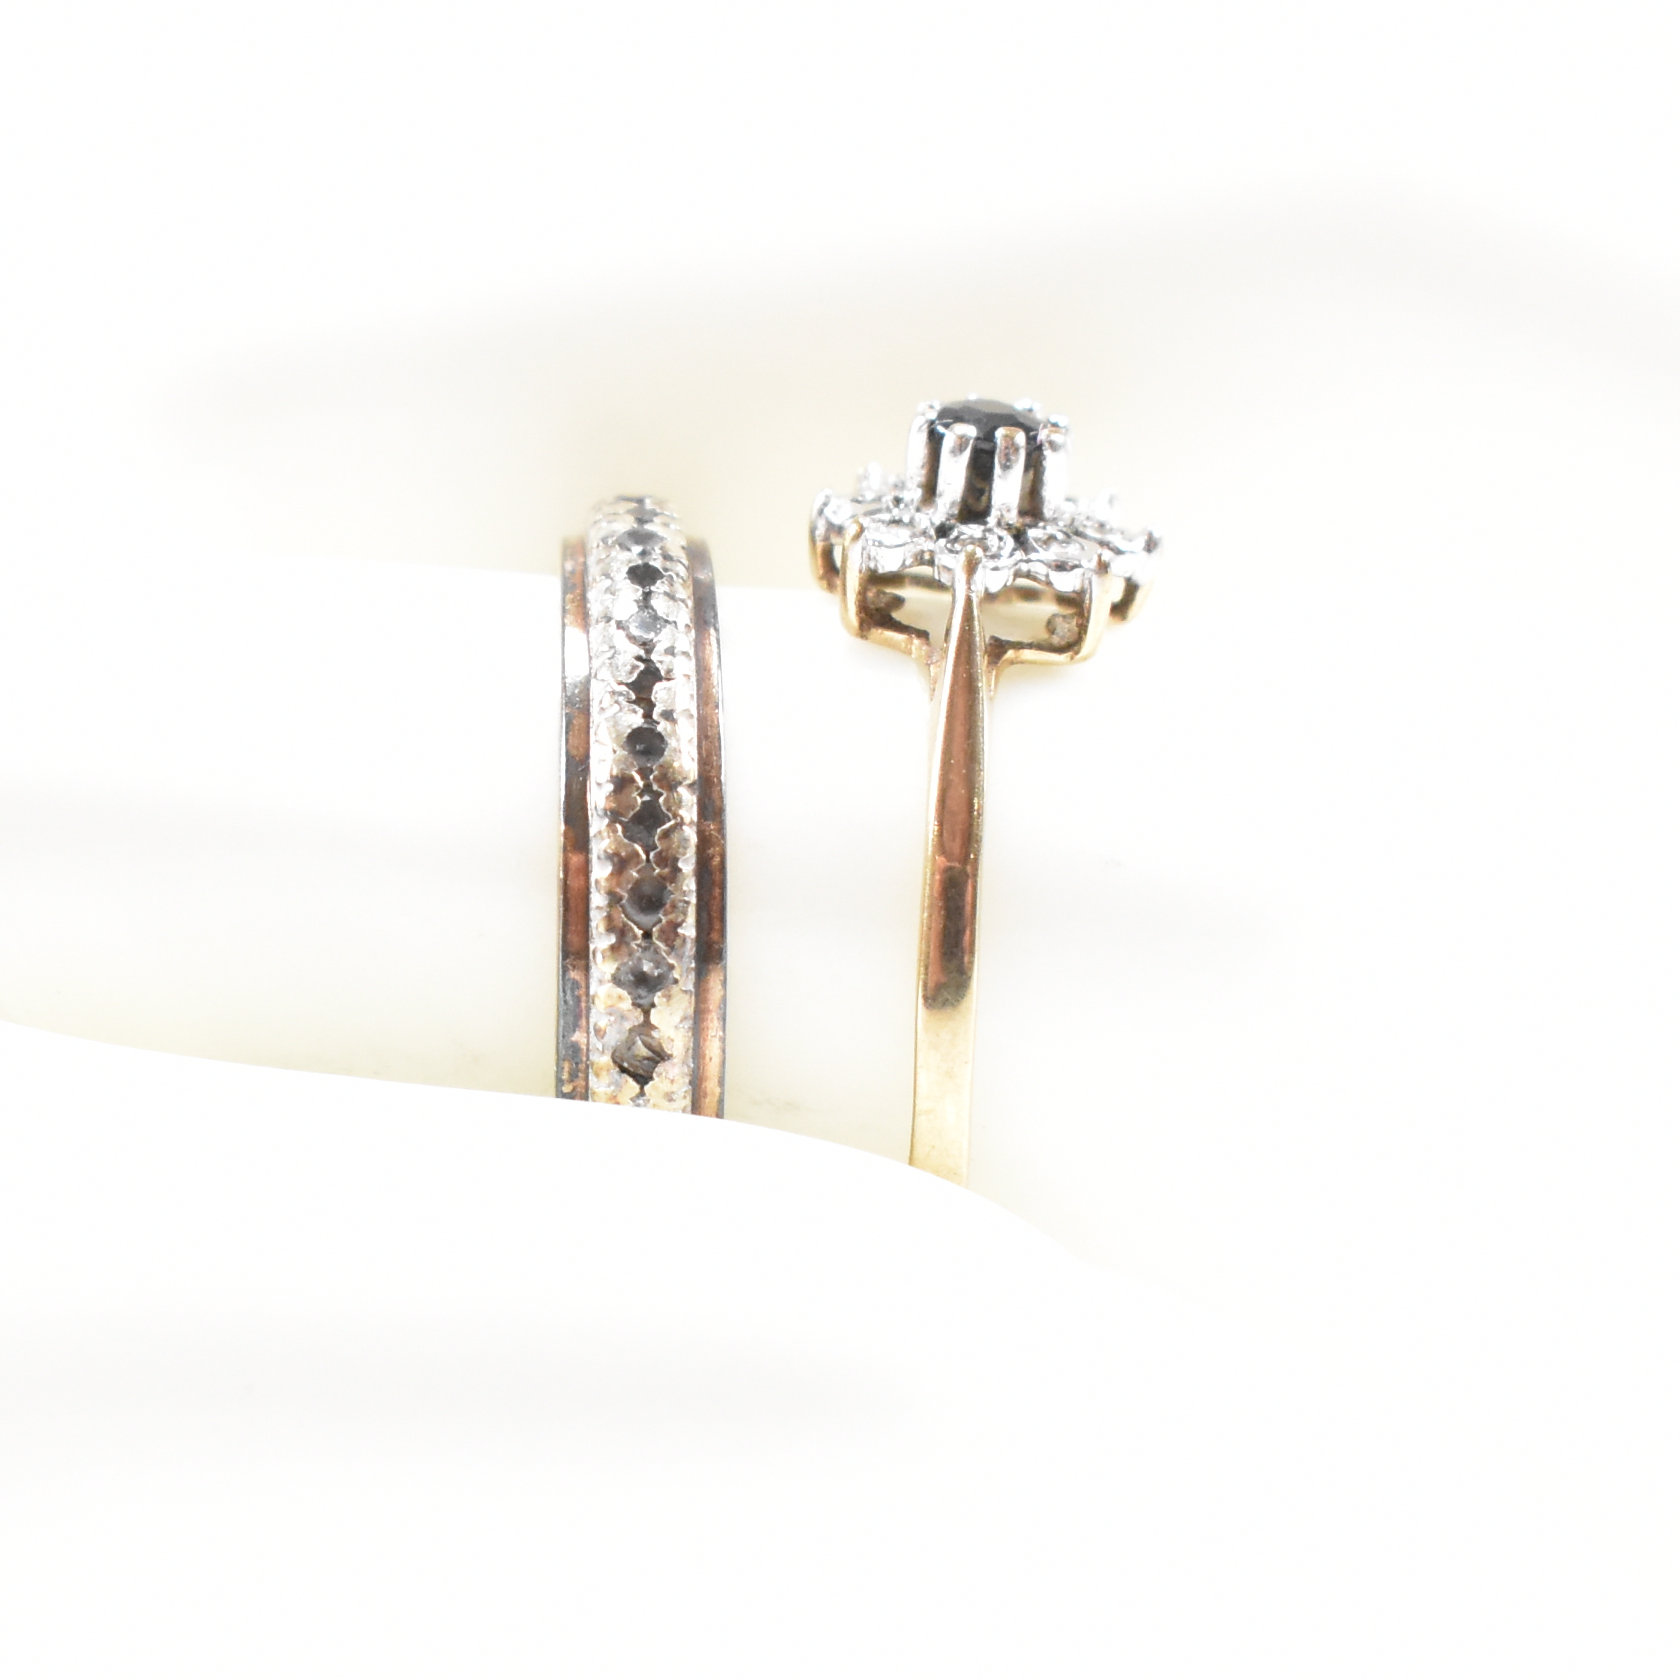 HALLMARKED SAPPHIRE & DIAMOND CLUSTER RING & GEM SET RING - Image 6 of 7